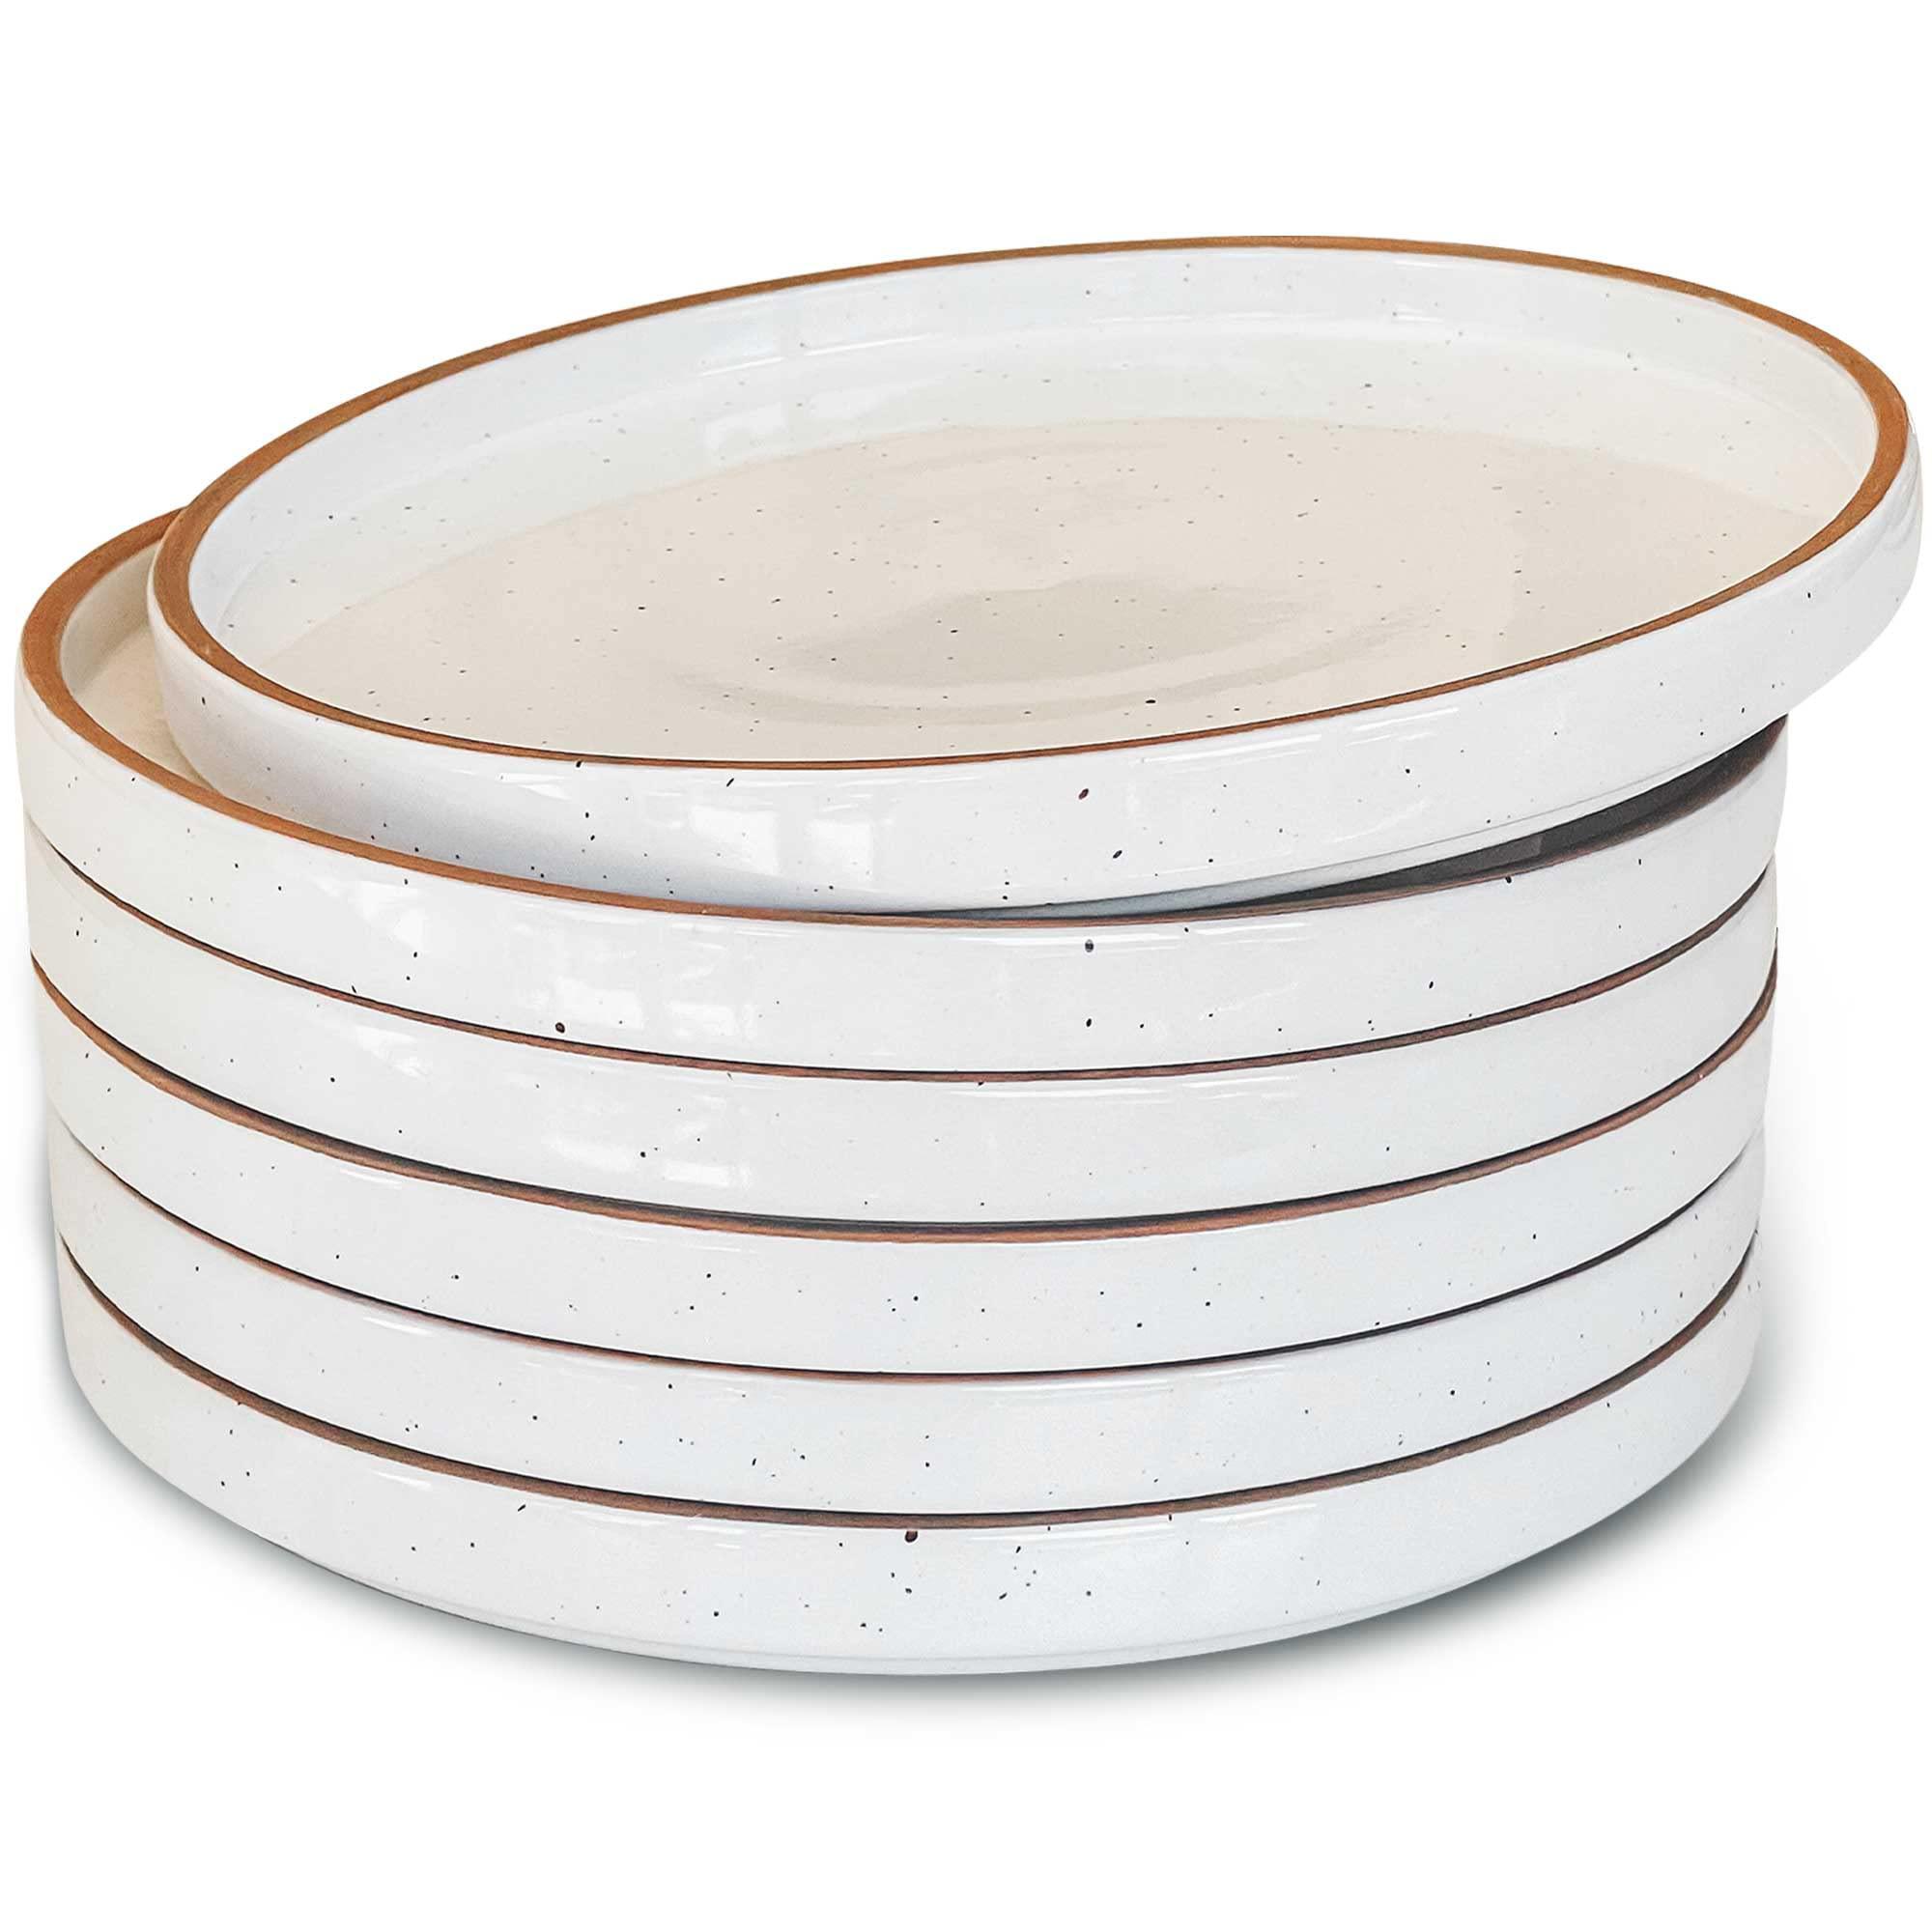 MORA CERAMICS HIT PAUSE mora ceramic flat plates set of 6-8 in